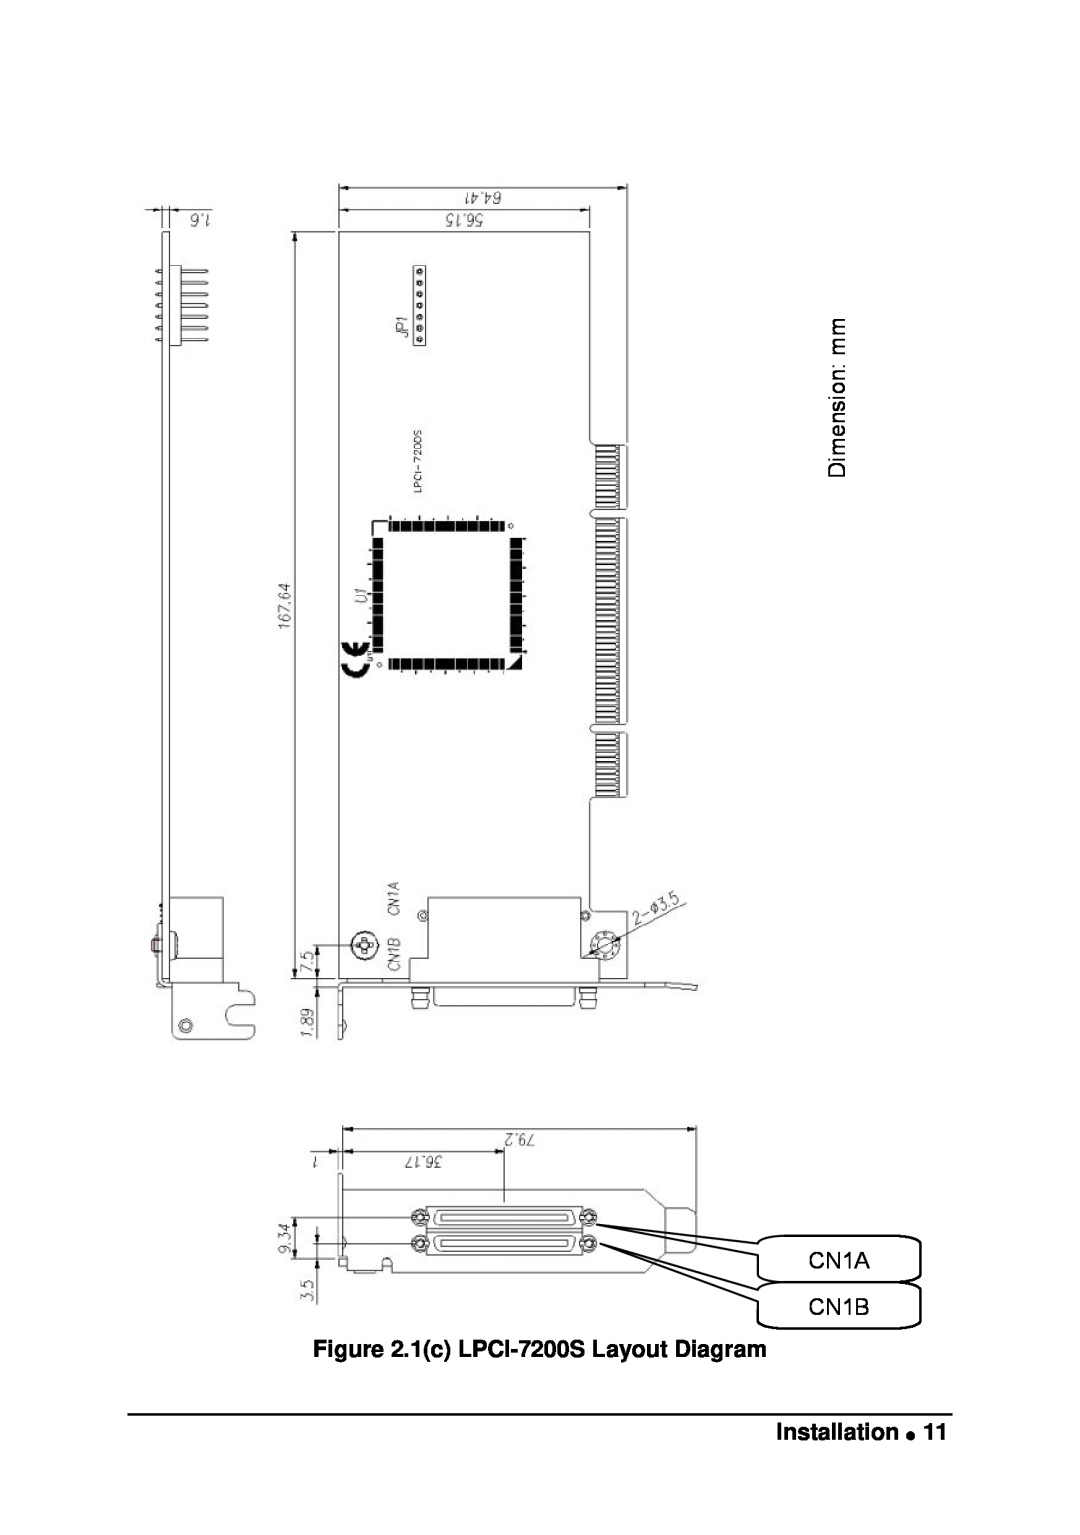 Intel manual Dimension mm CN1A CN1B, 1c LPCI-7200S Layout Diagram Installation 